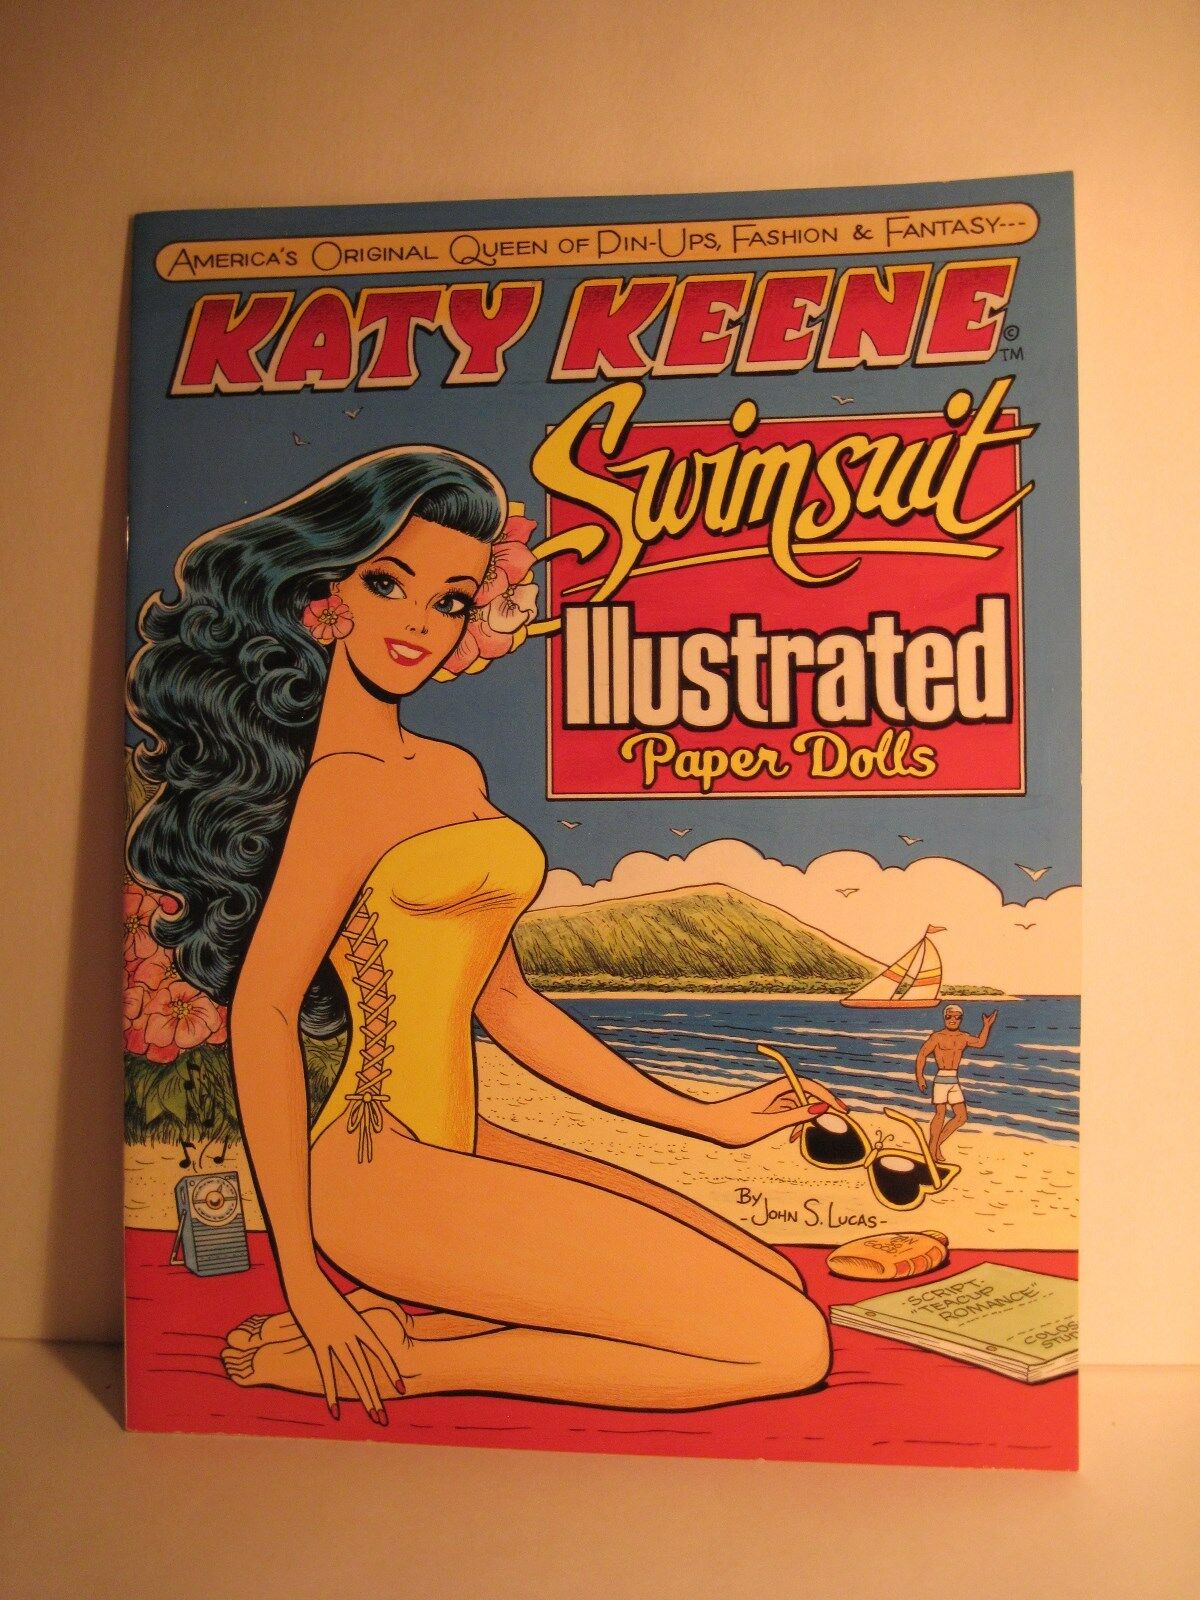 Katy Keene Swimsuit Illustrated Paper Doll